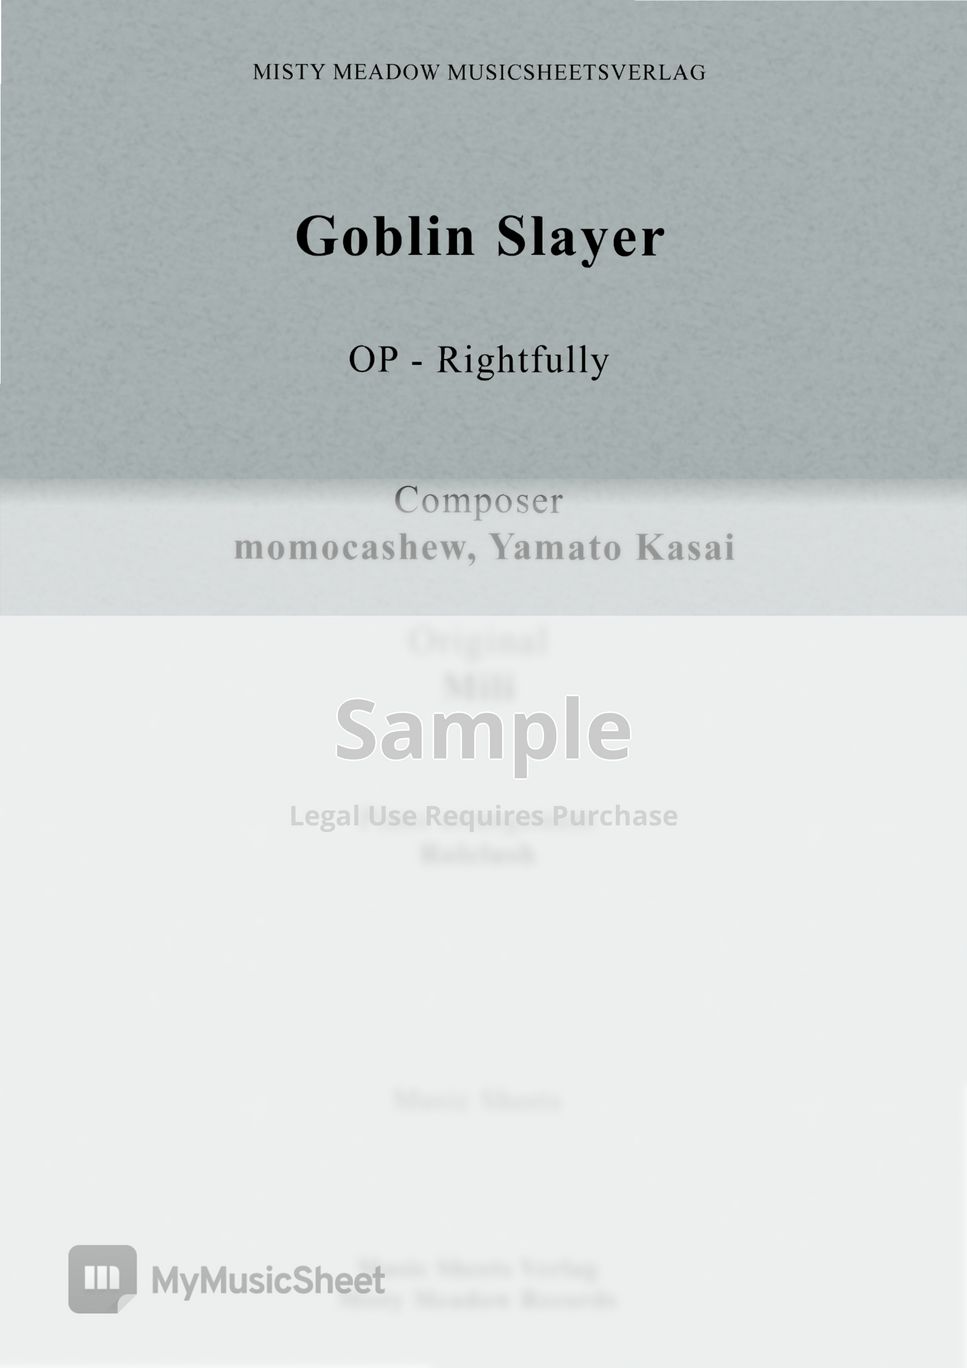 momocashew, Yamato Kasai, Mili - Goblin Slayer OP - Rightfully/ Mili (piano cover) by Rolelush